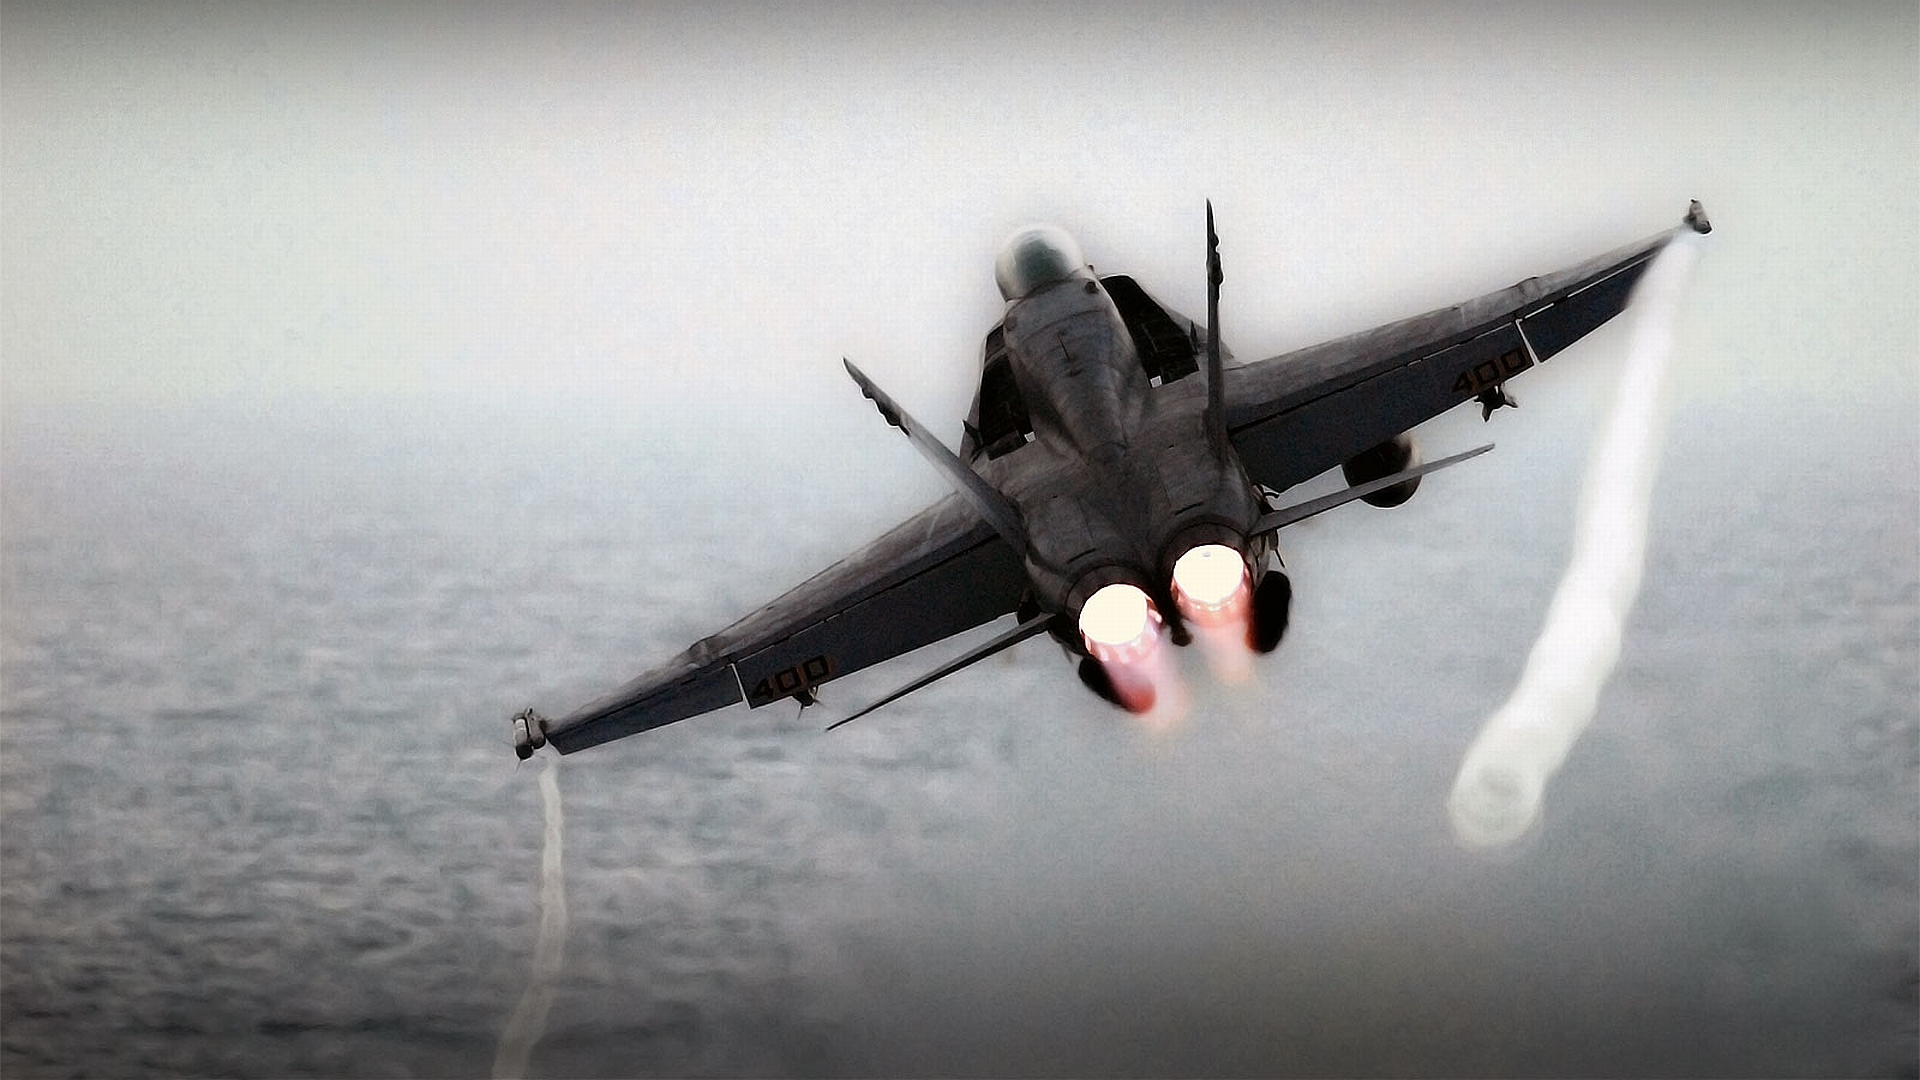 Military jet fighter soaring through the skies as a striking desktop wallpaper.